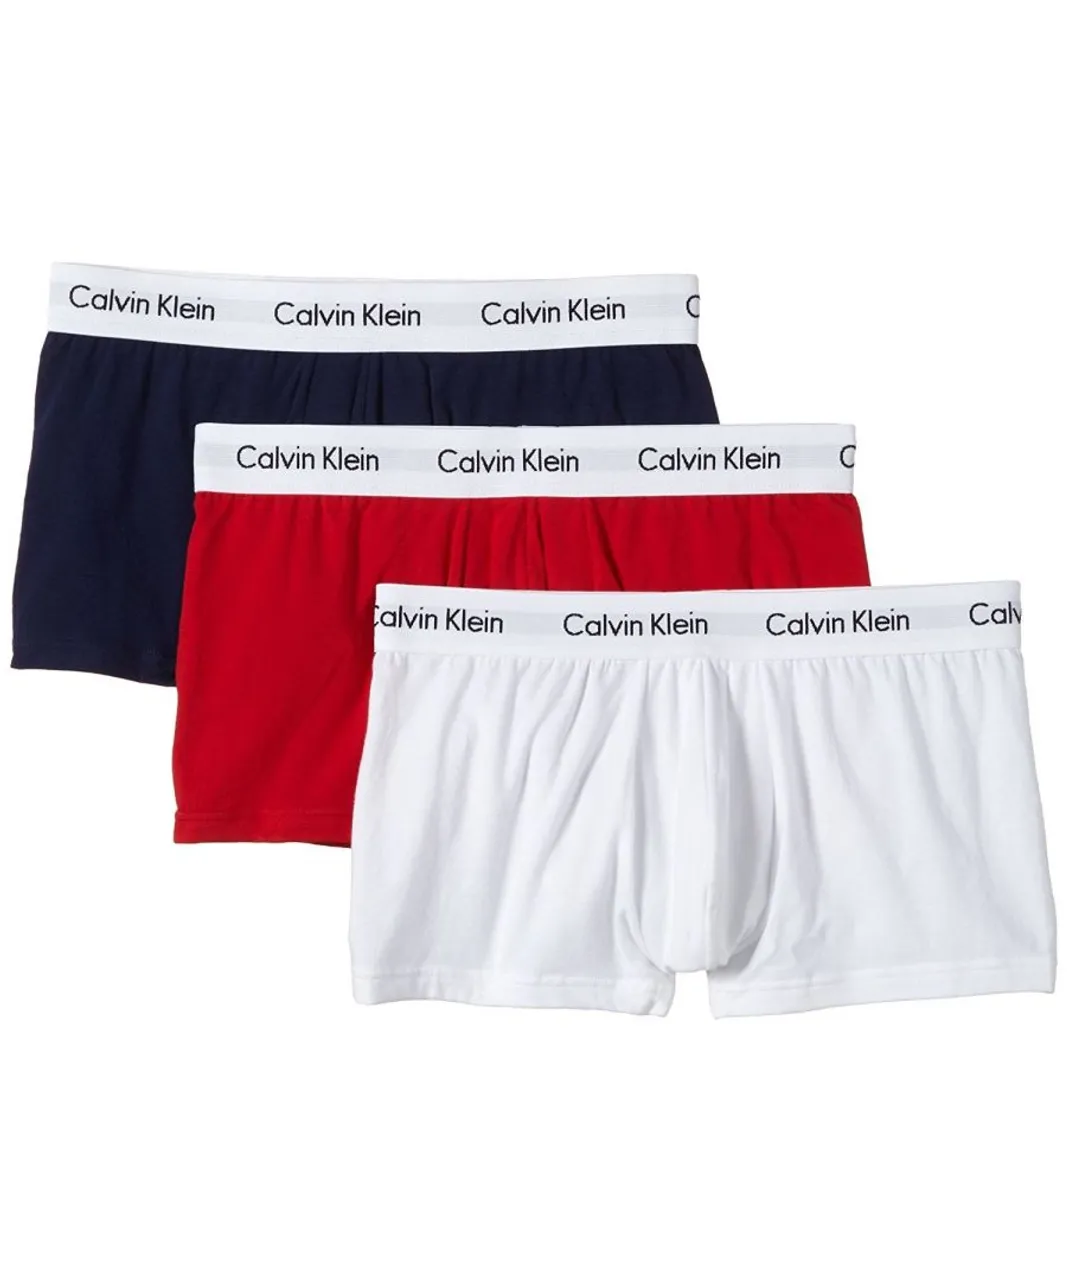 Calvin Klein Mens Cotton 3 Pack Trunks - Multicolour